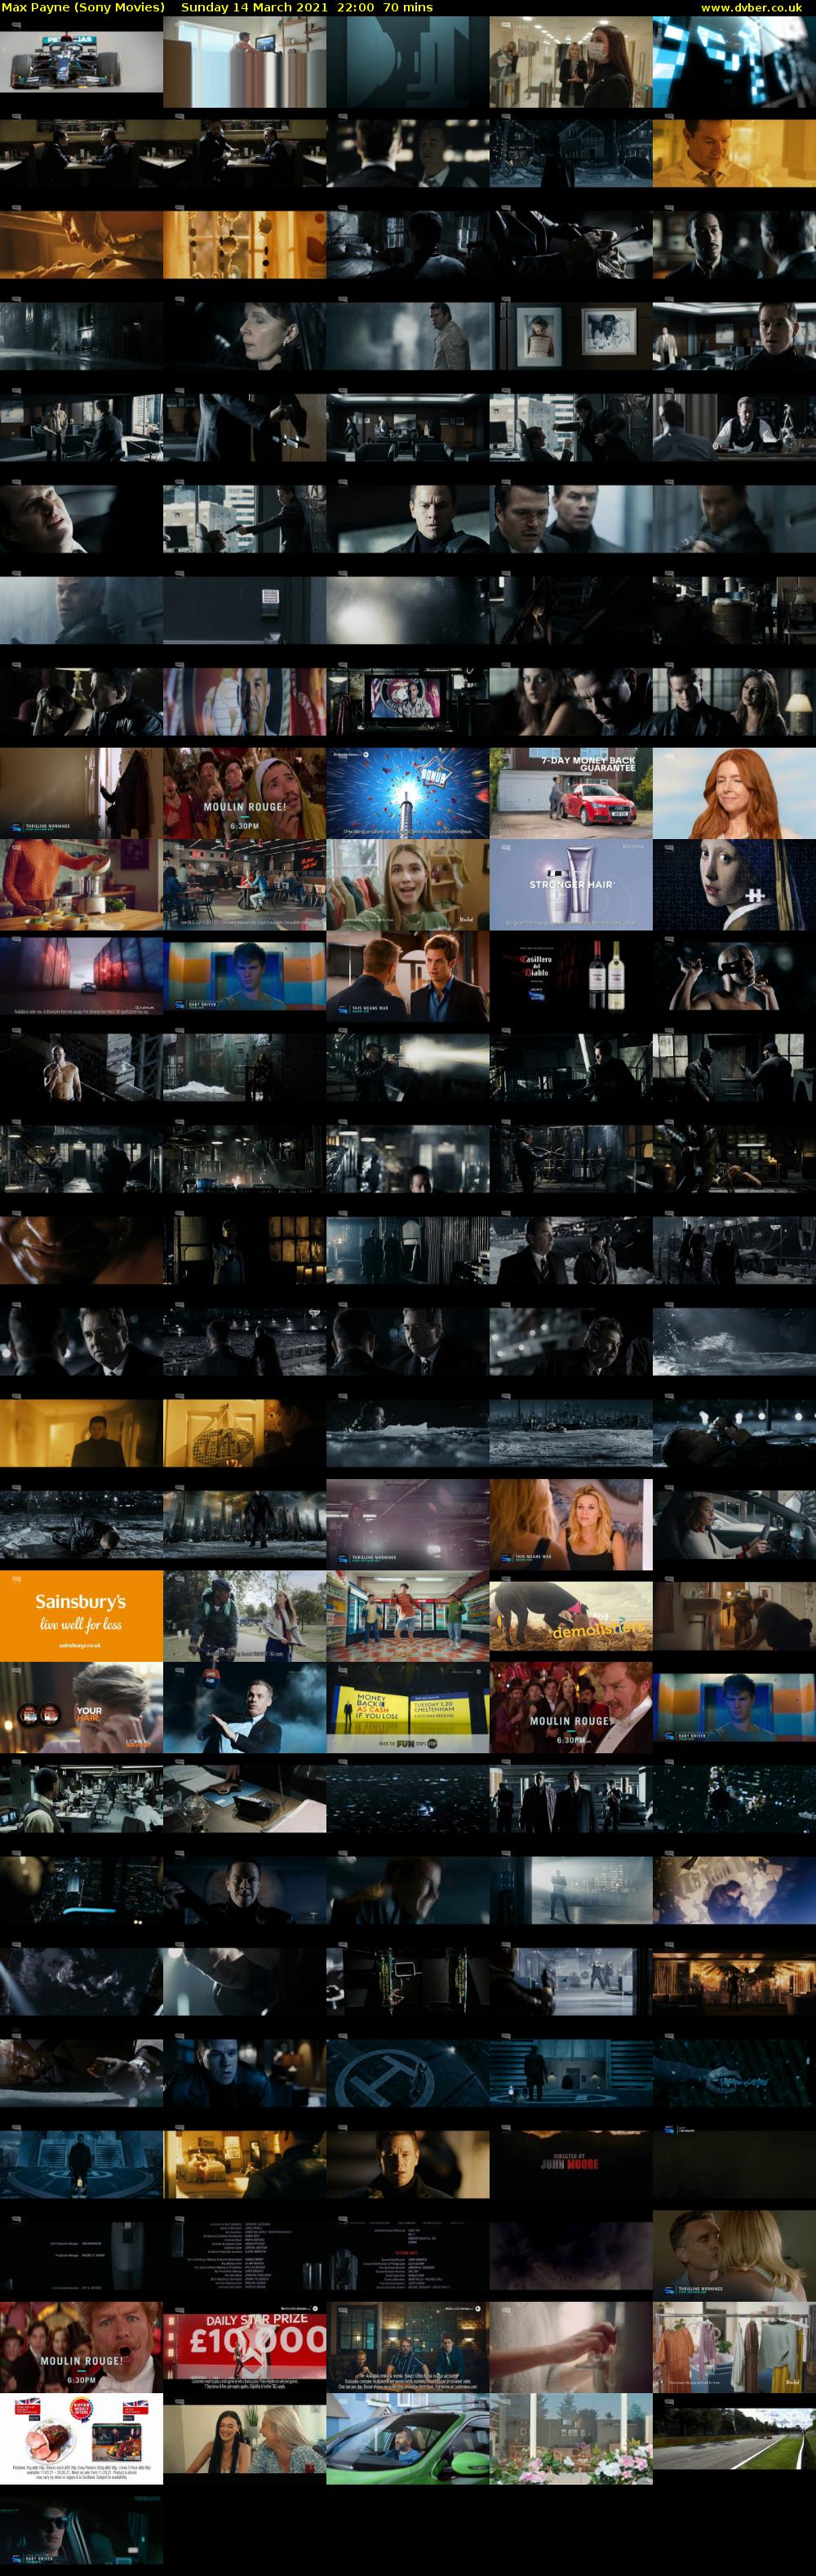 Max Payne (Sony Movies) Sunday 14 March 2021 22:00 - 23:10